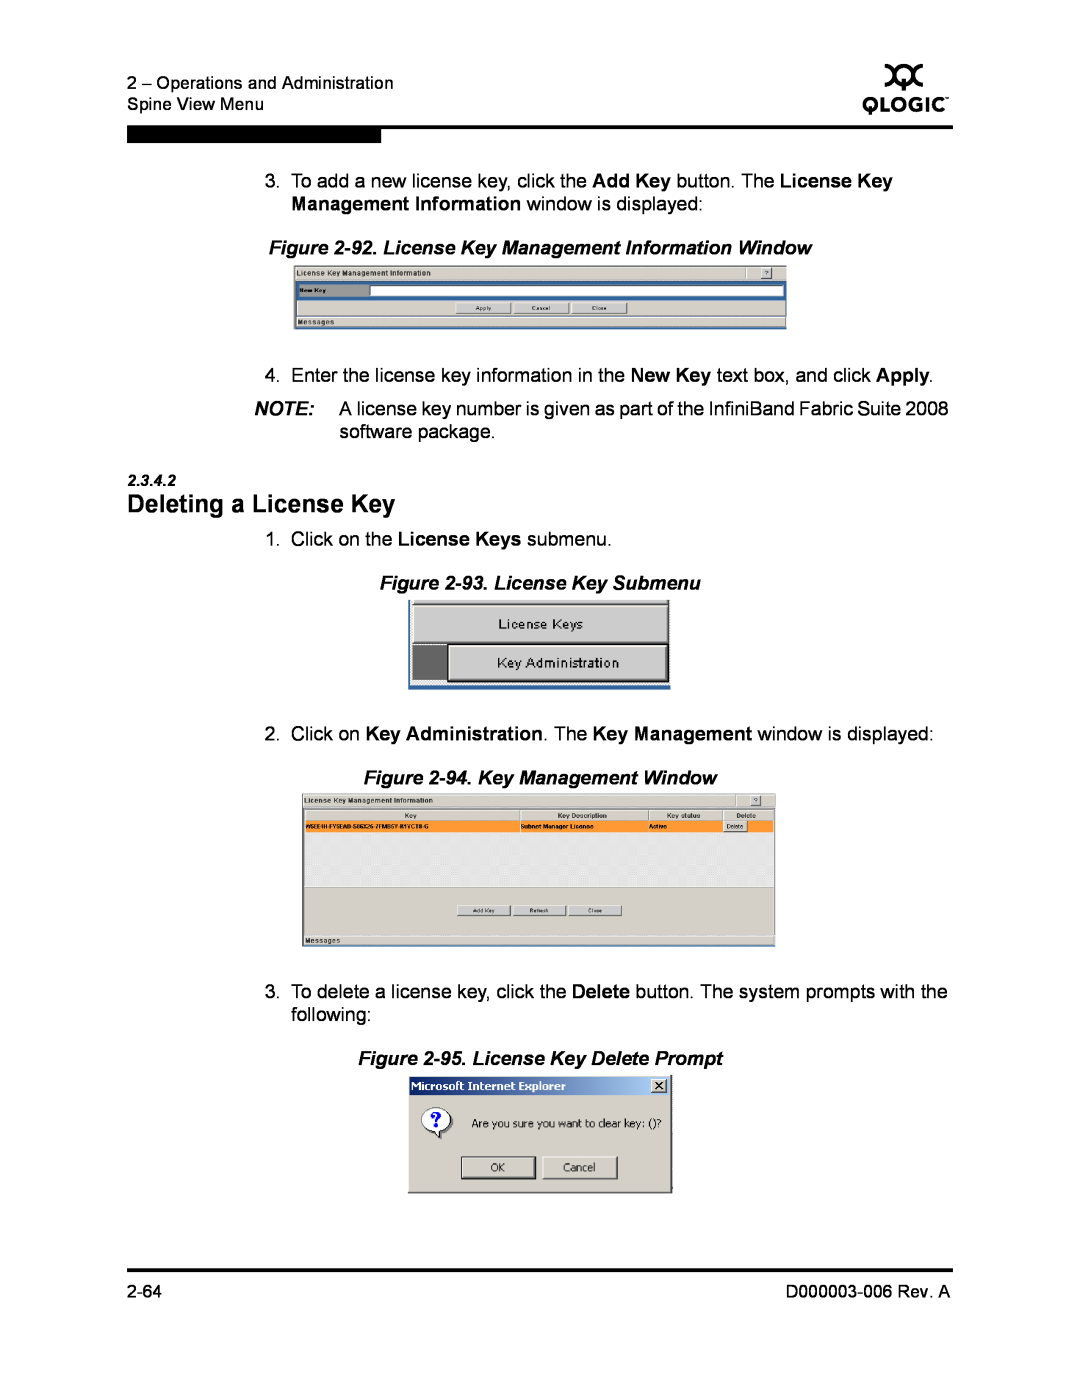 Q-Logic 9000 manual Deleting a License Key, 92. License Key Management Information Window, 93. License Key Submenu 